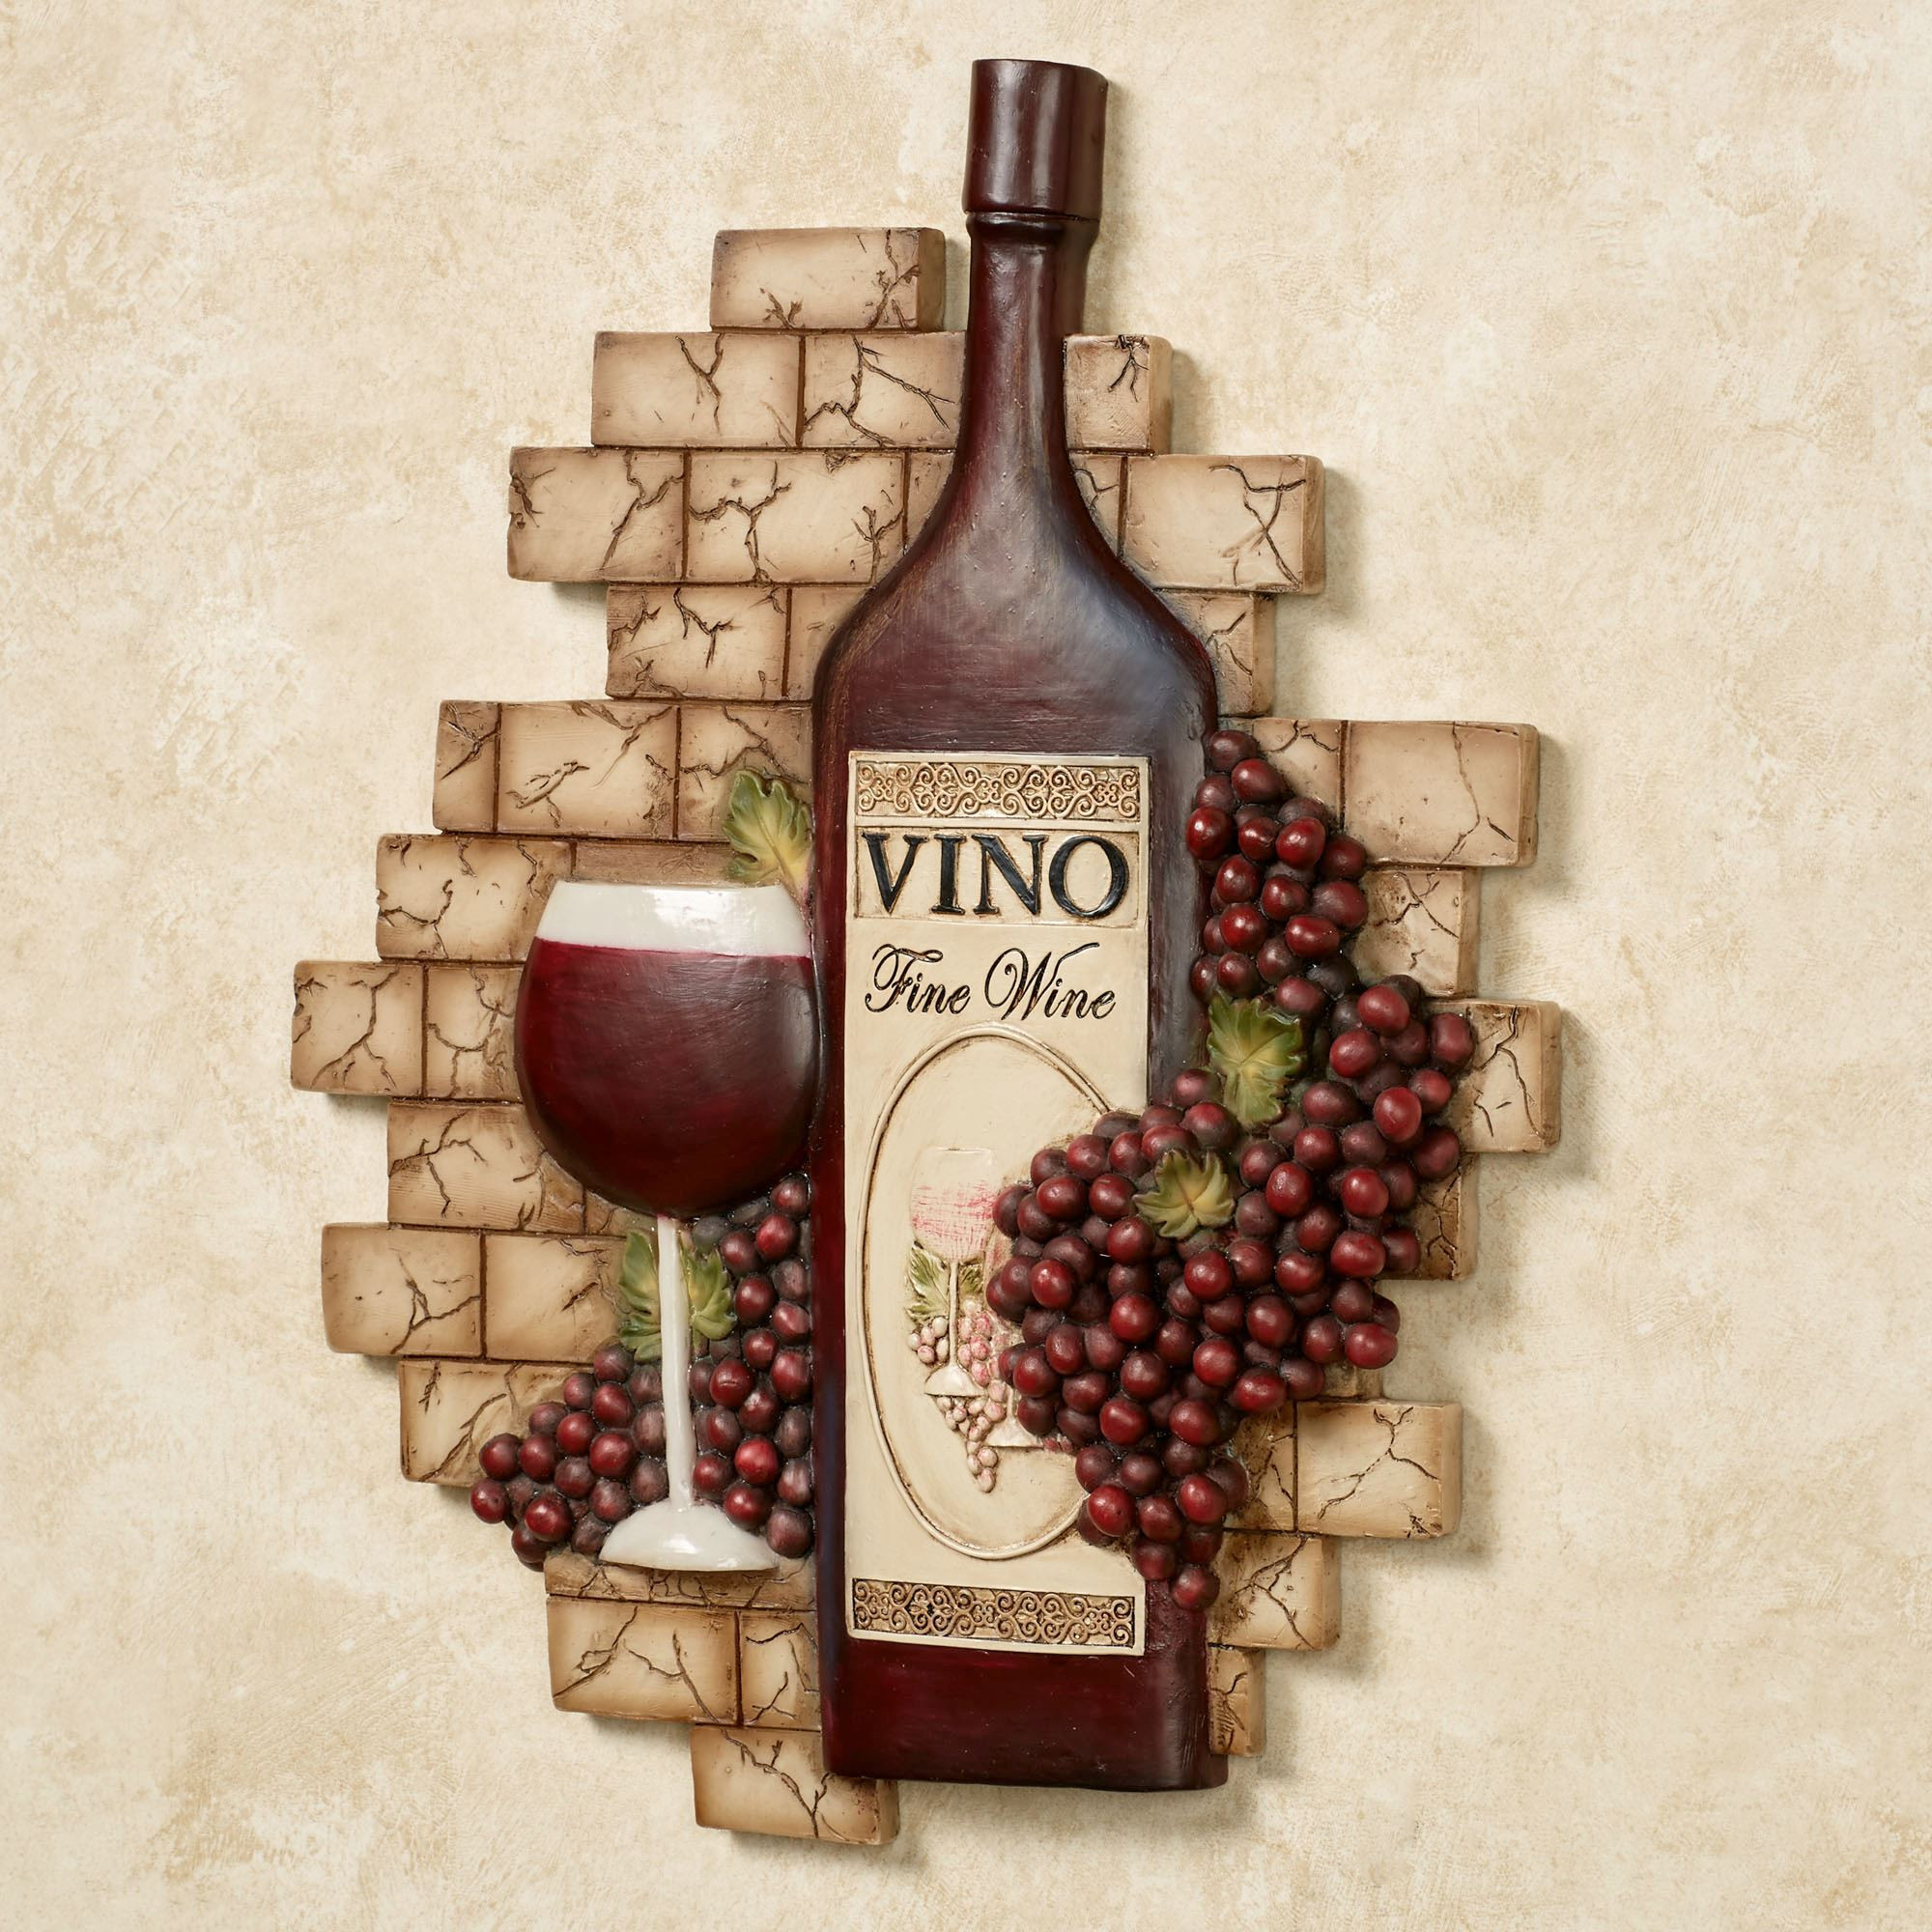 Wine Wall Decor For Kitchen
 Vino Italiano Wine and Grapes Wall Plaque